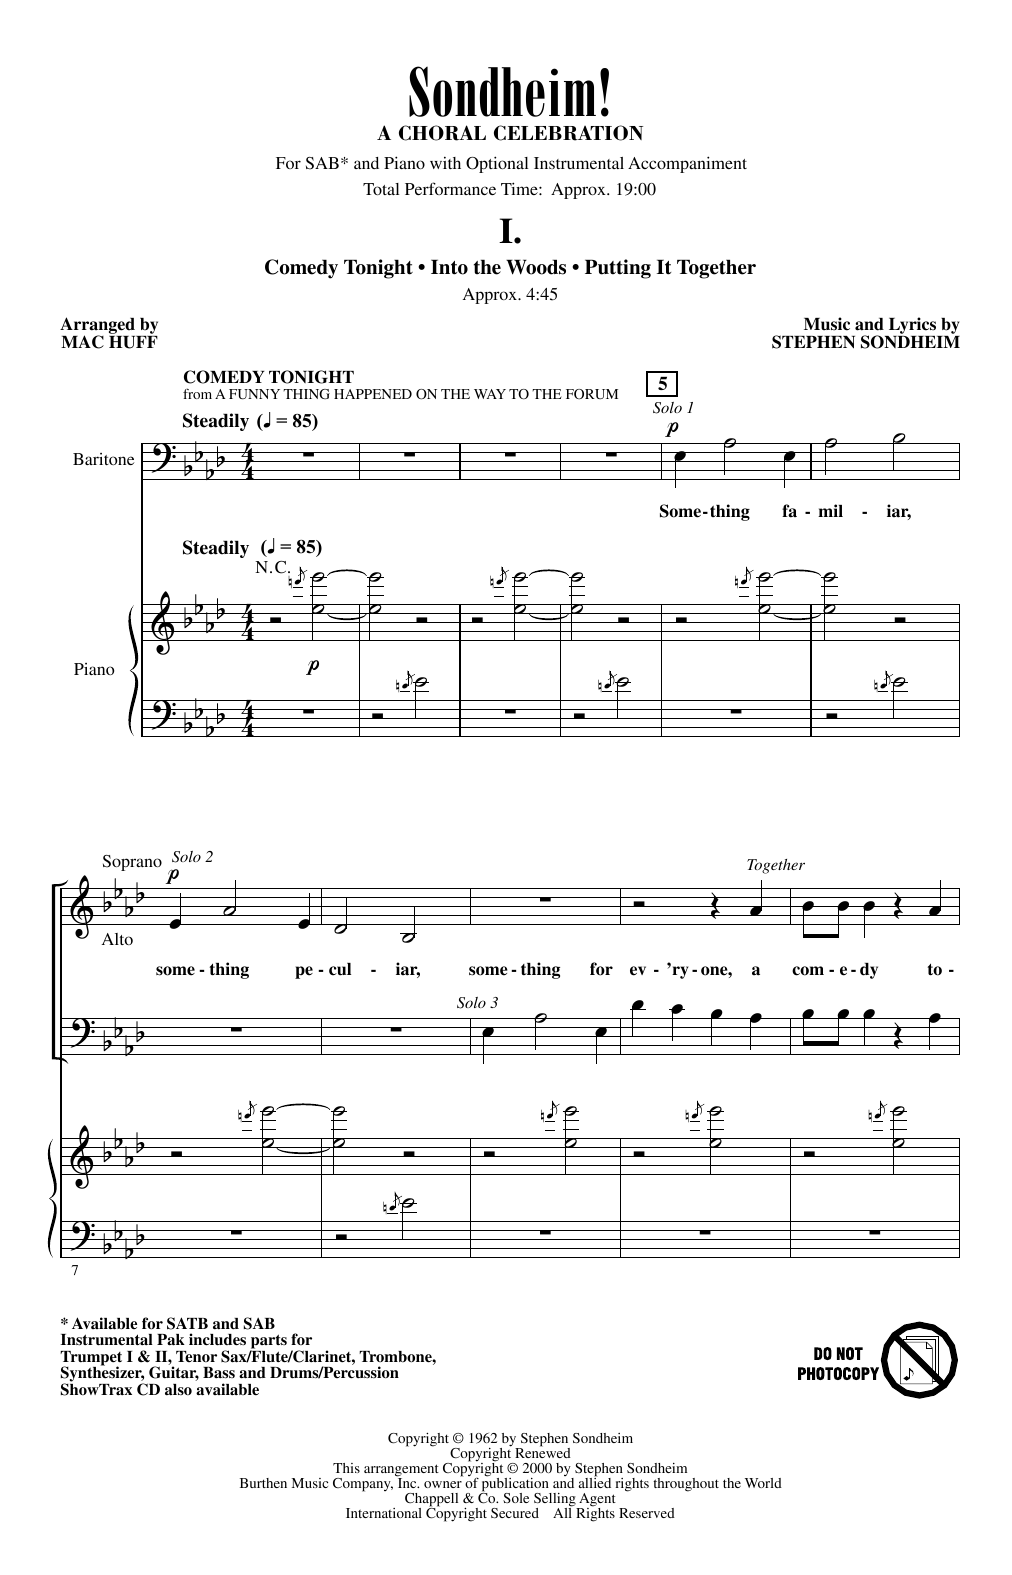 Stephen Sondheim Sondheim! A Choral Celebration (Medley) (arr. Mac Huff) Sheet Music Notes & Chords for SATB Choir - Download or Print PDF